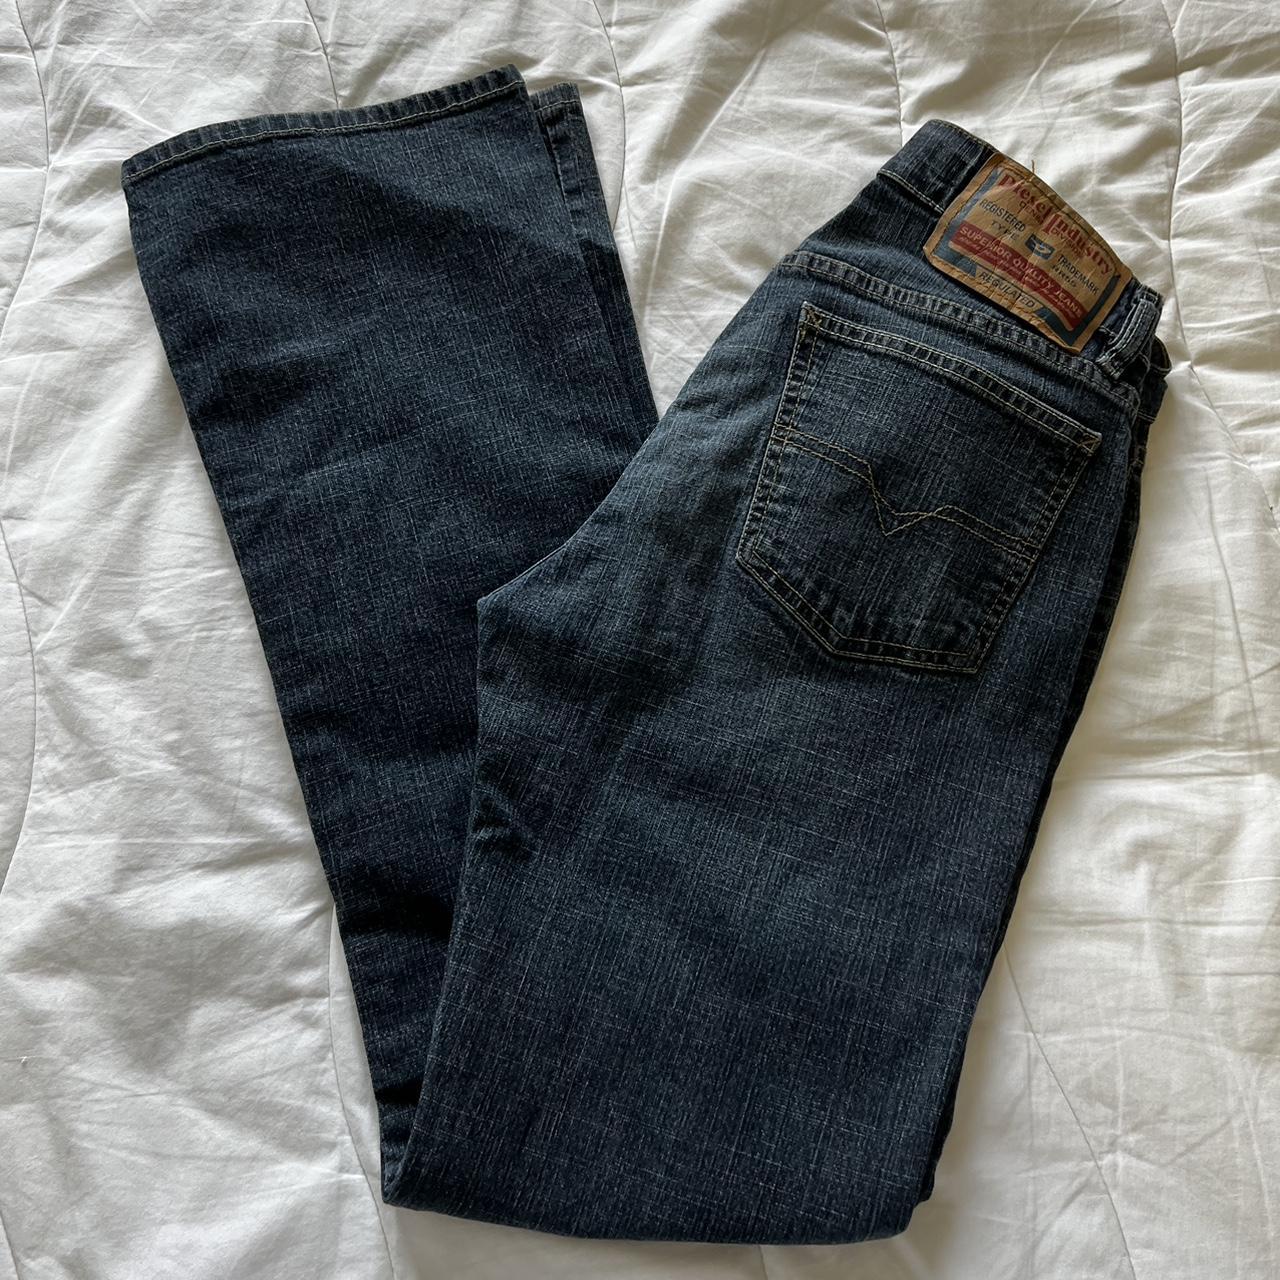 Vintage 90s diesel jeans size 28 waist bootcut high... - Depop